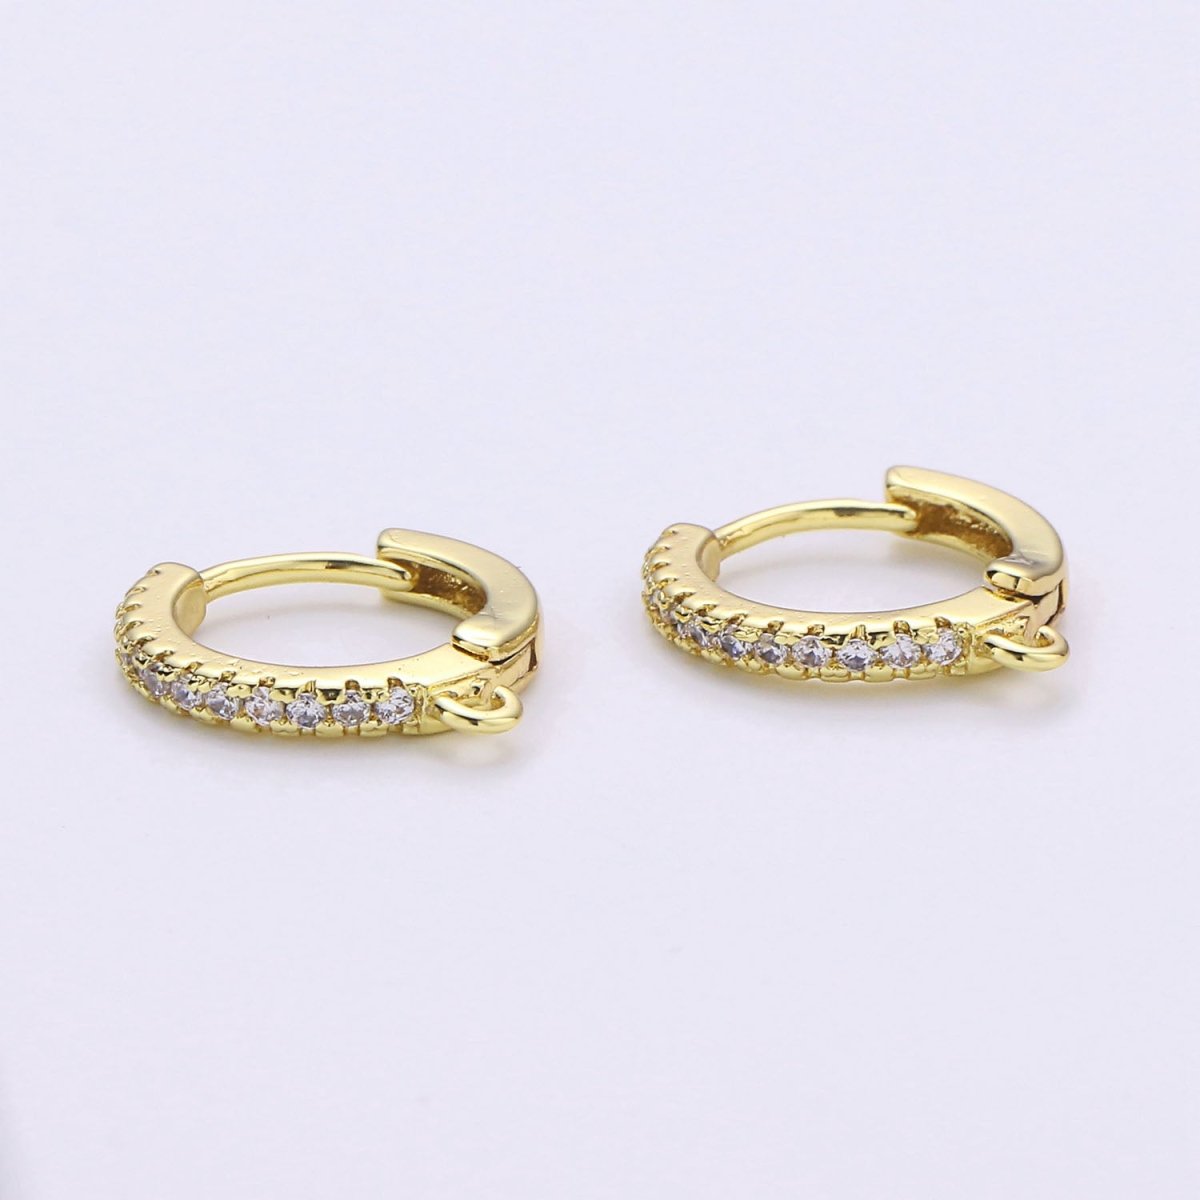 Simple Minimalist Huggies Gold Filled Earring Supplies for DIY Earring K-473, K-578 - DLUXCA